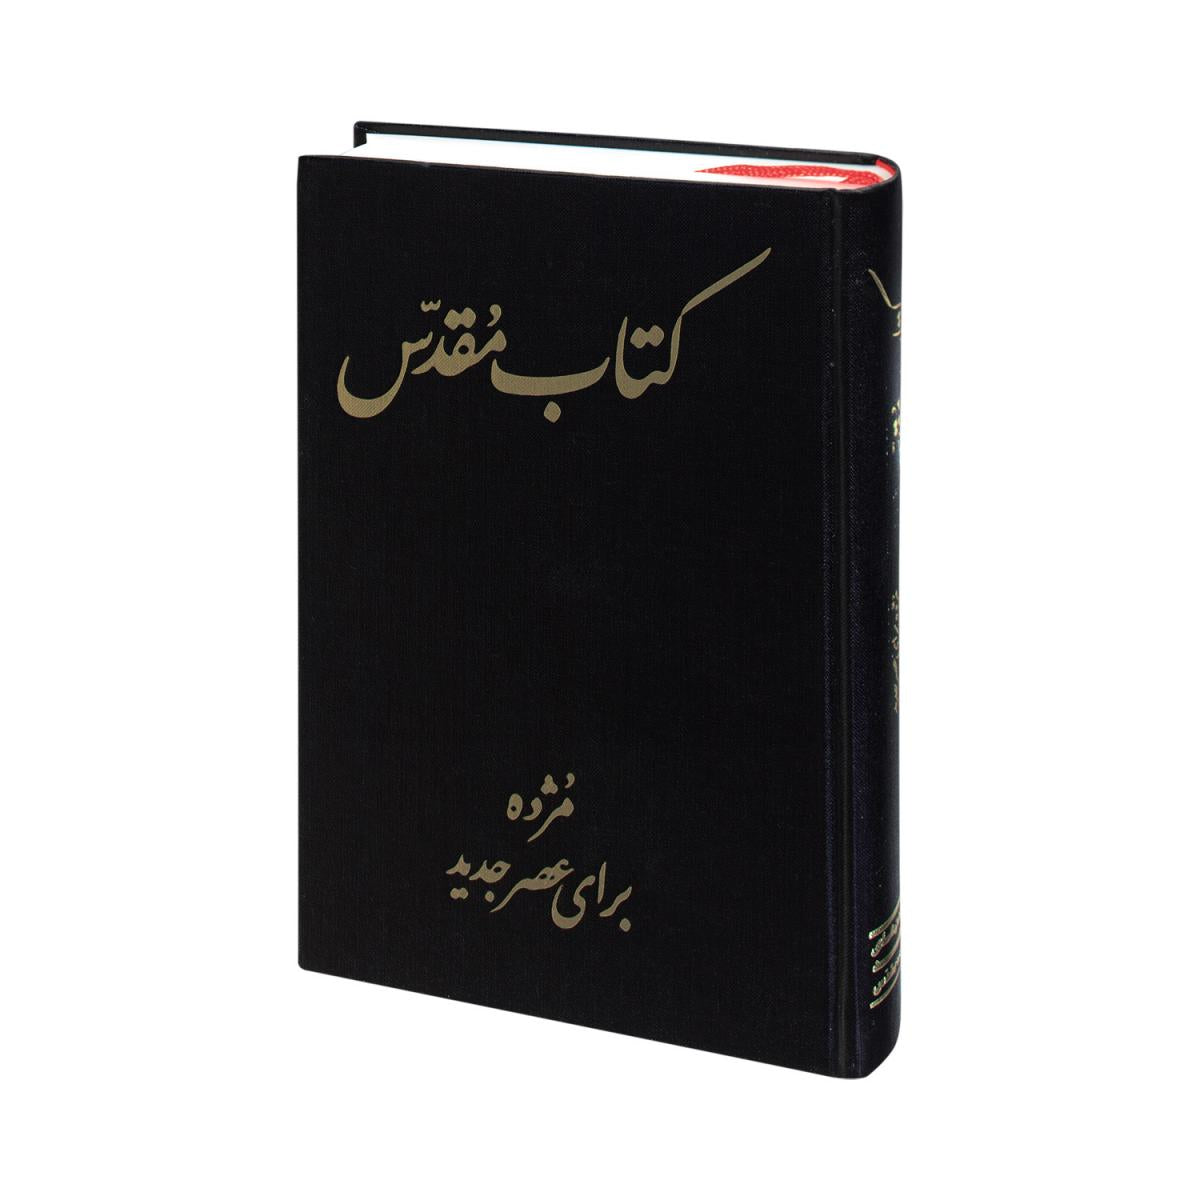 Biblia persa - Versión persa de hoy